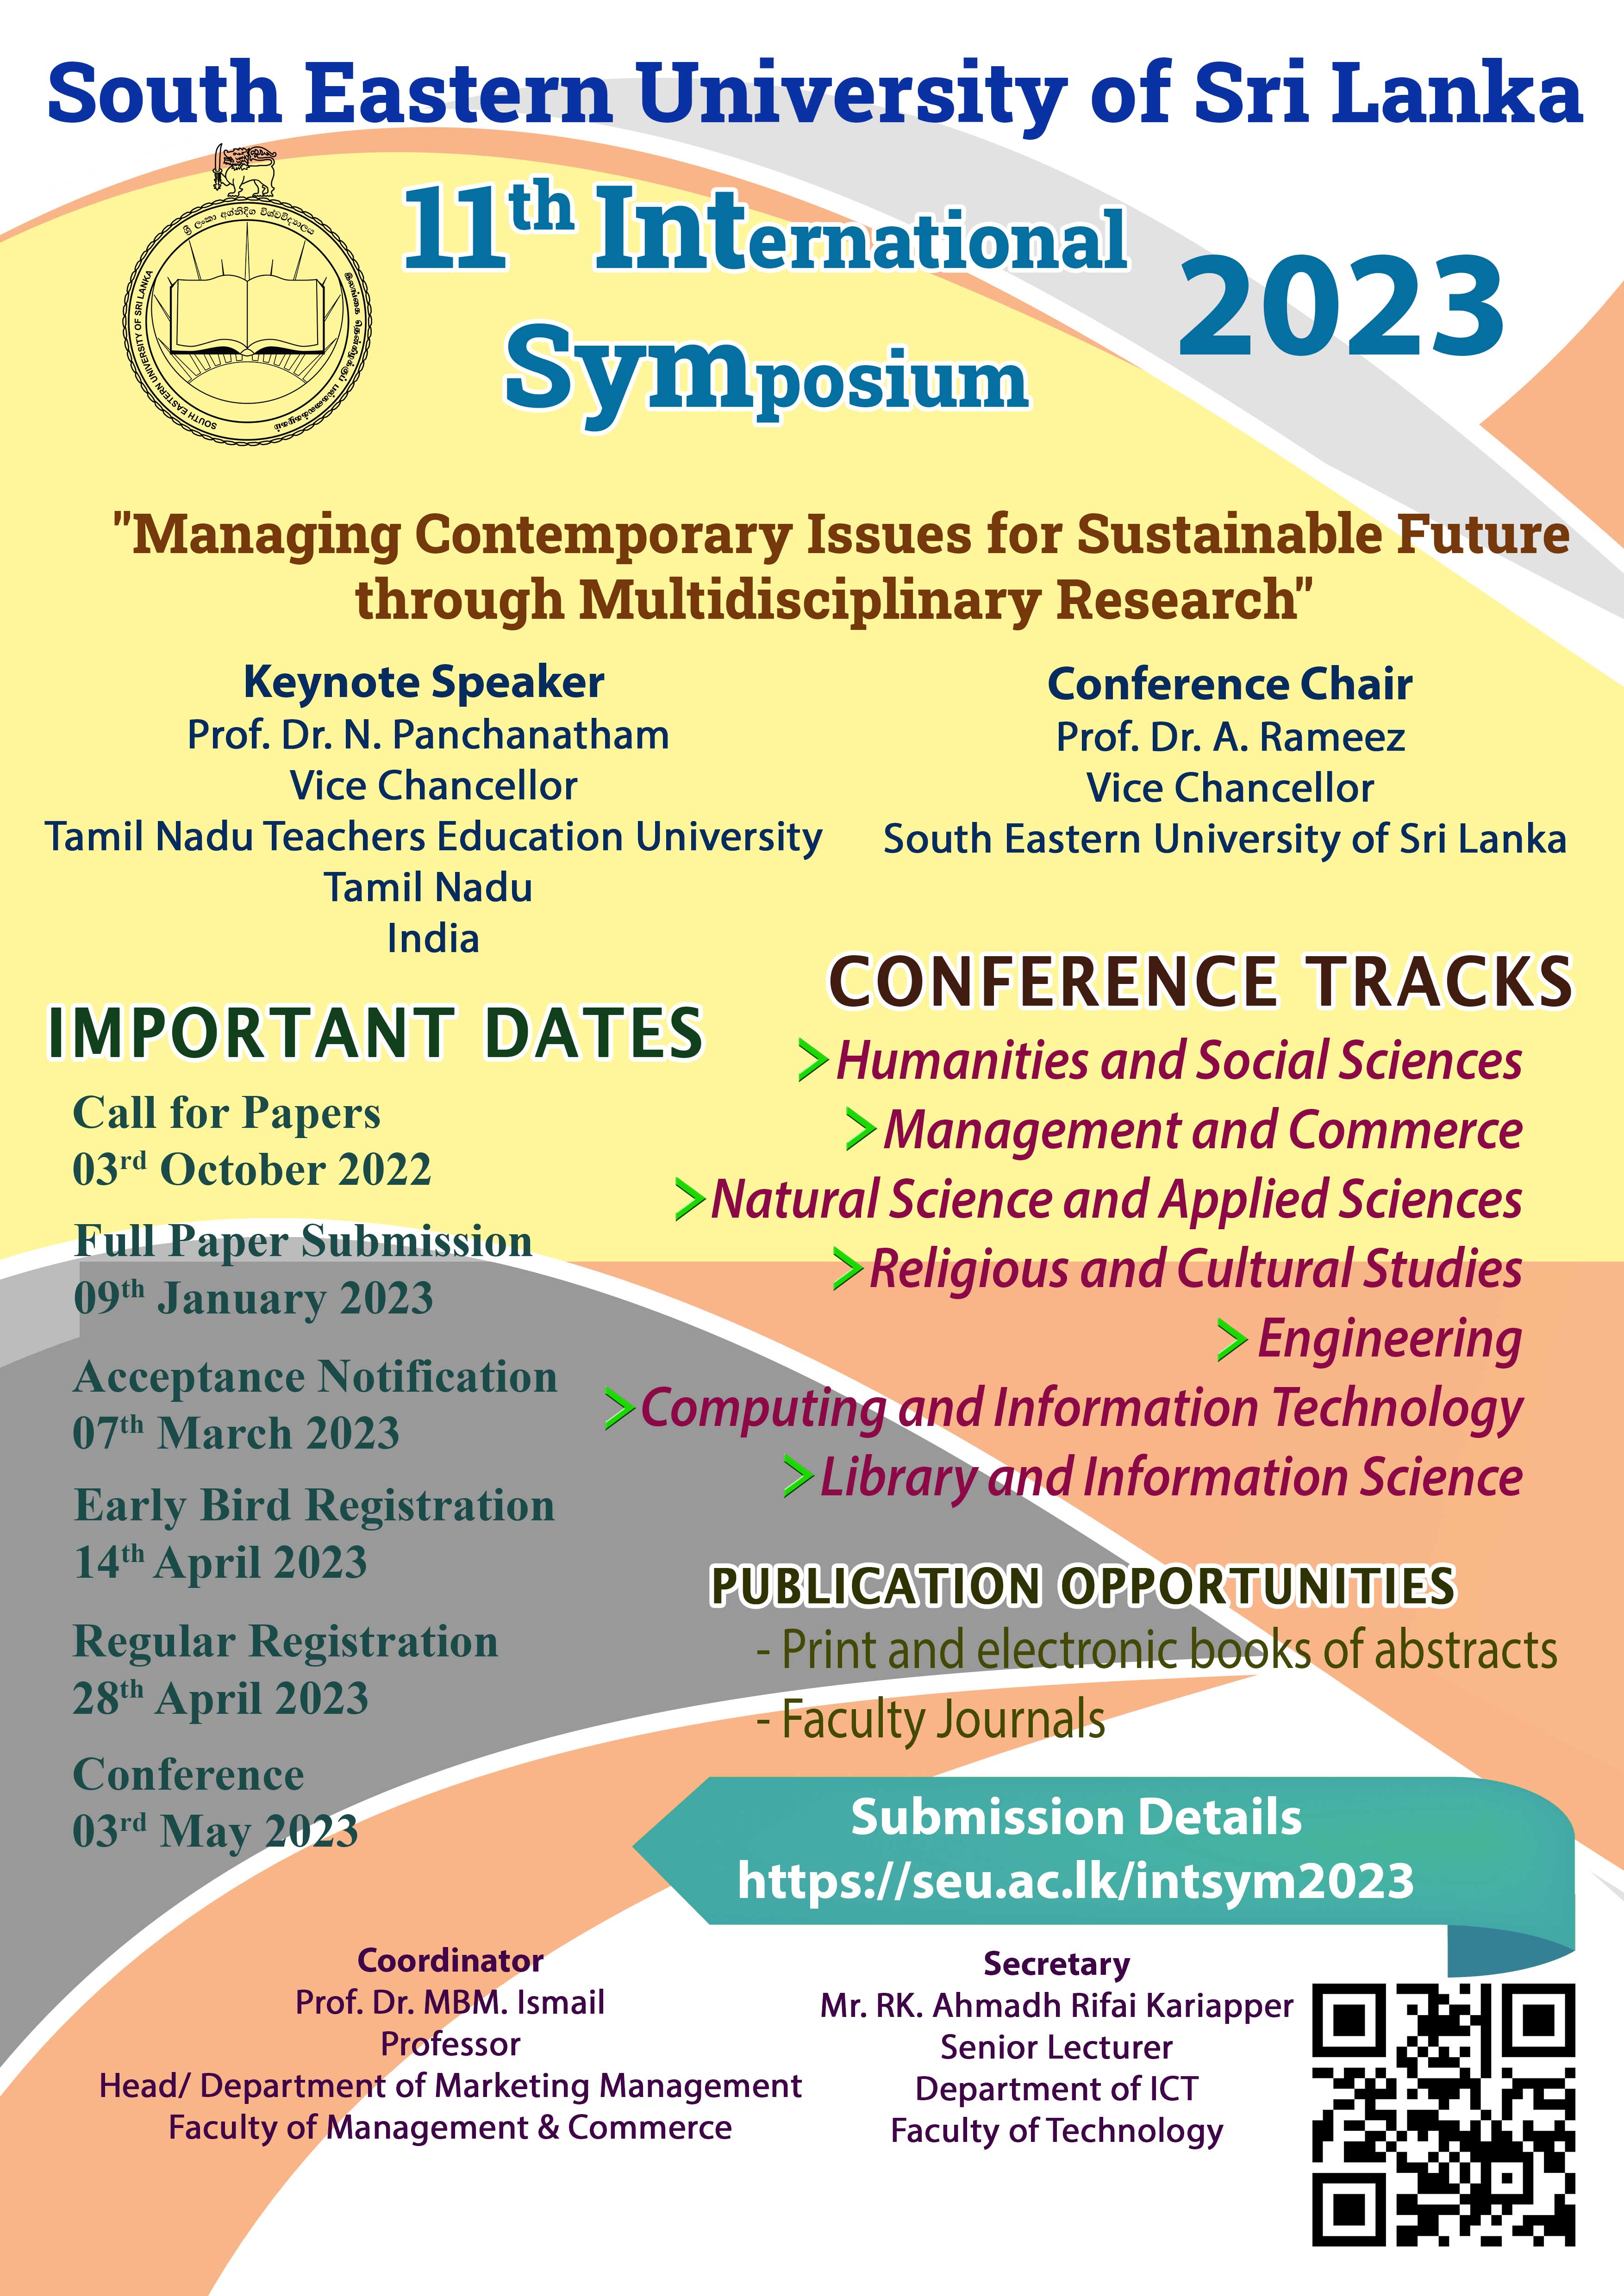 IntSym 2023 International Symposium SEUSL